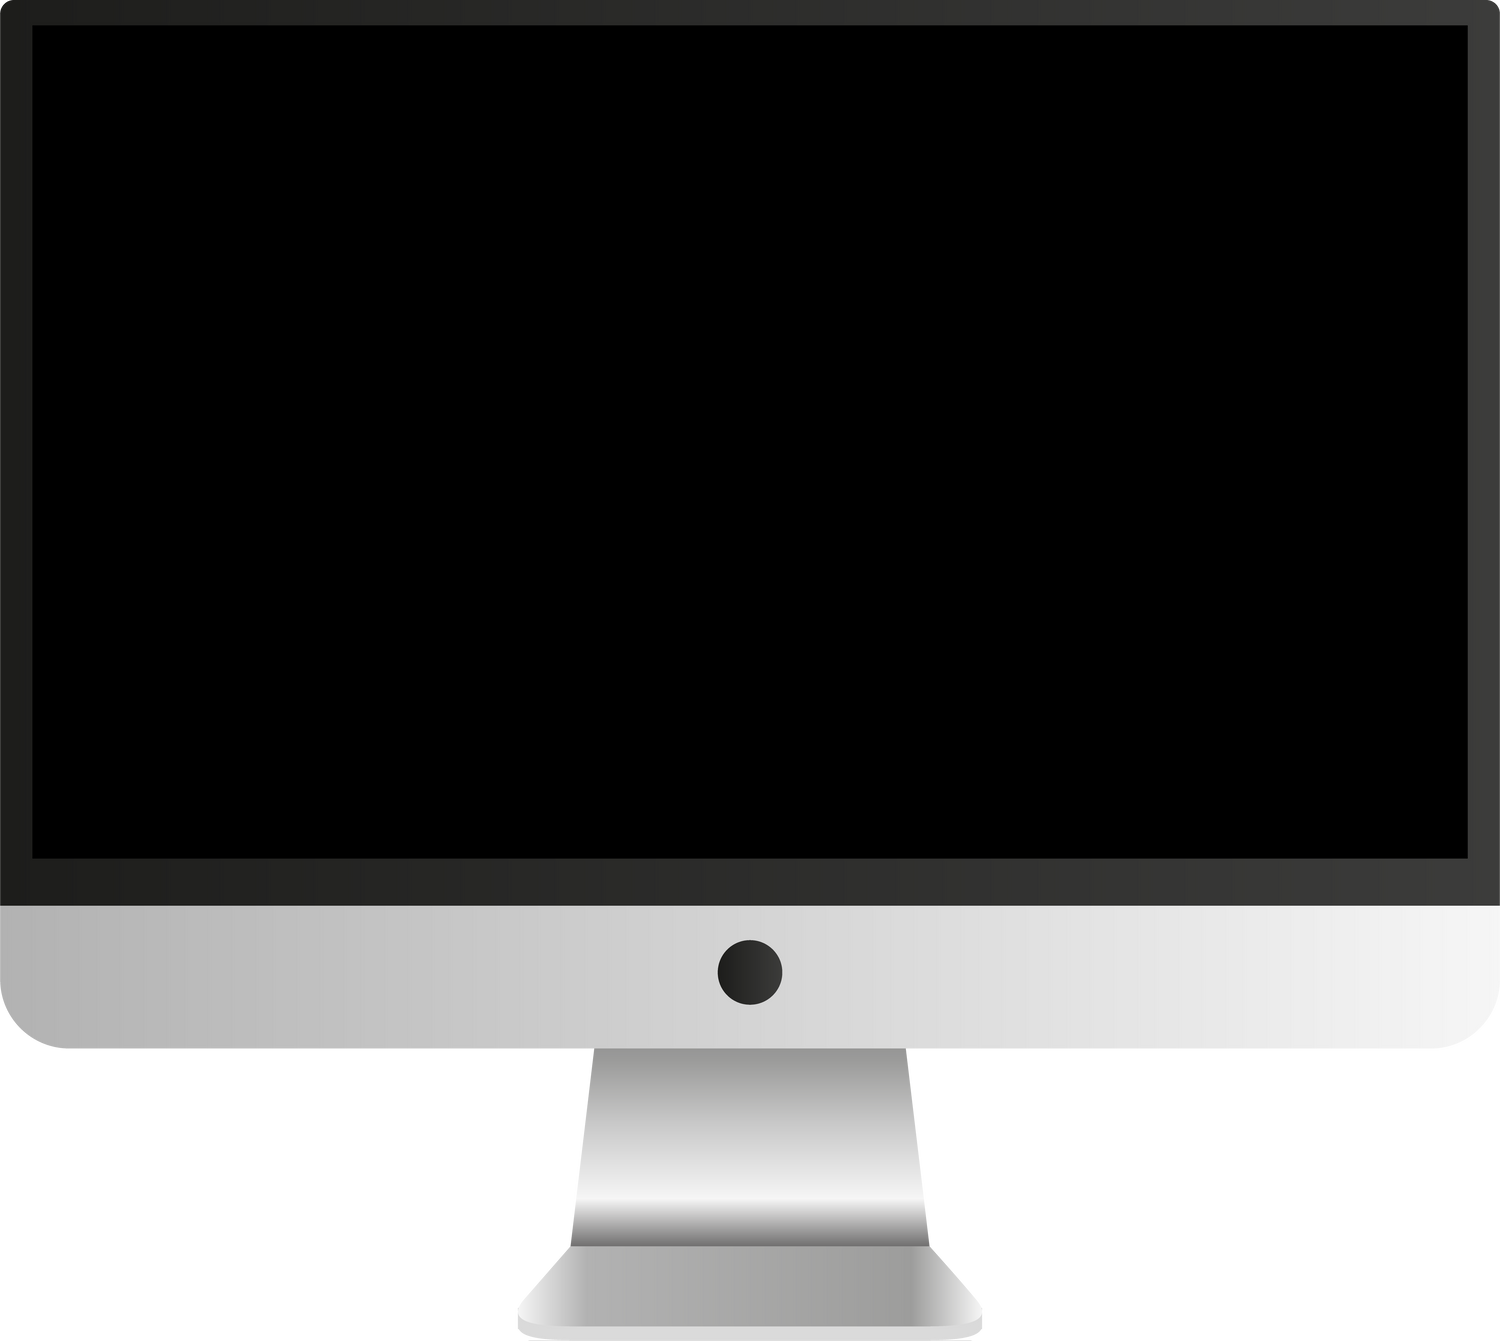 PC Desktop Computer Icon